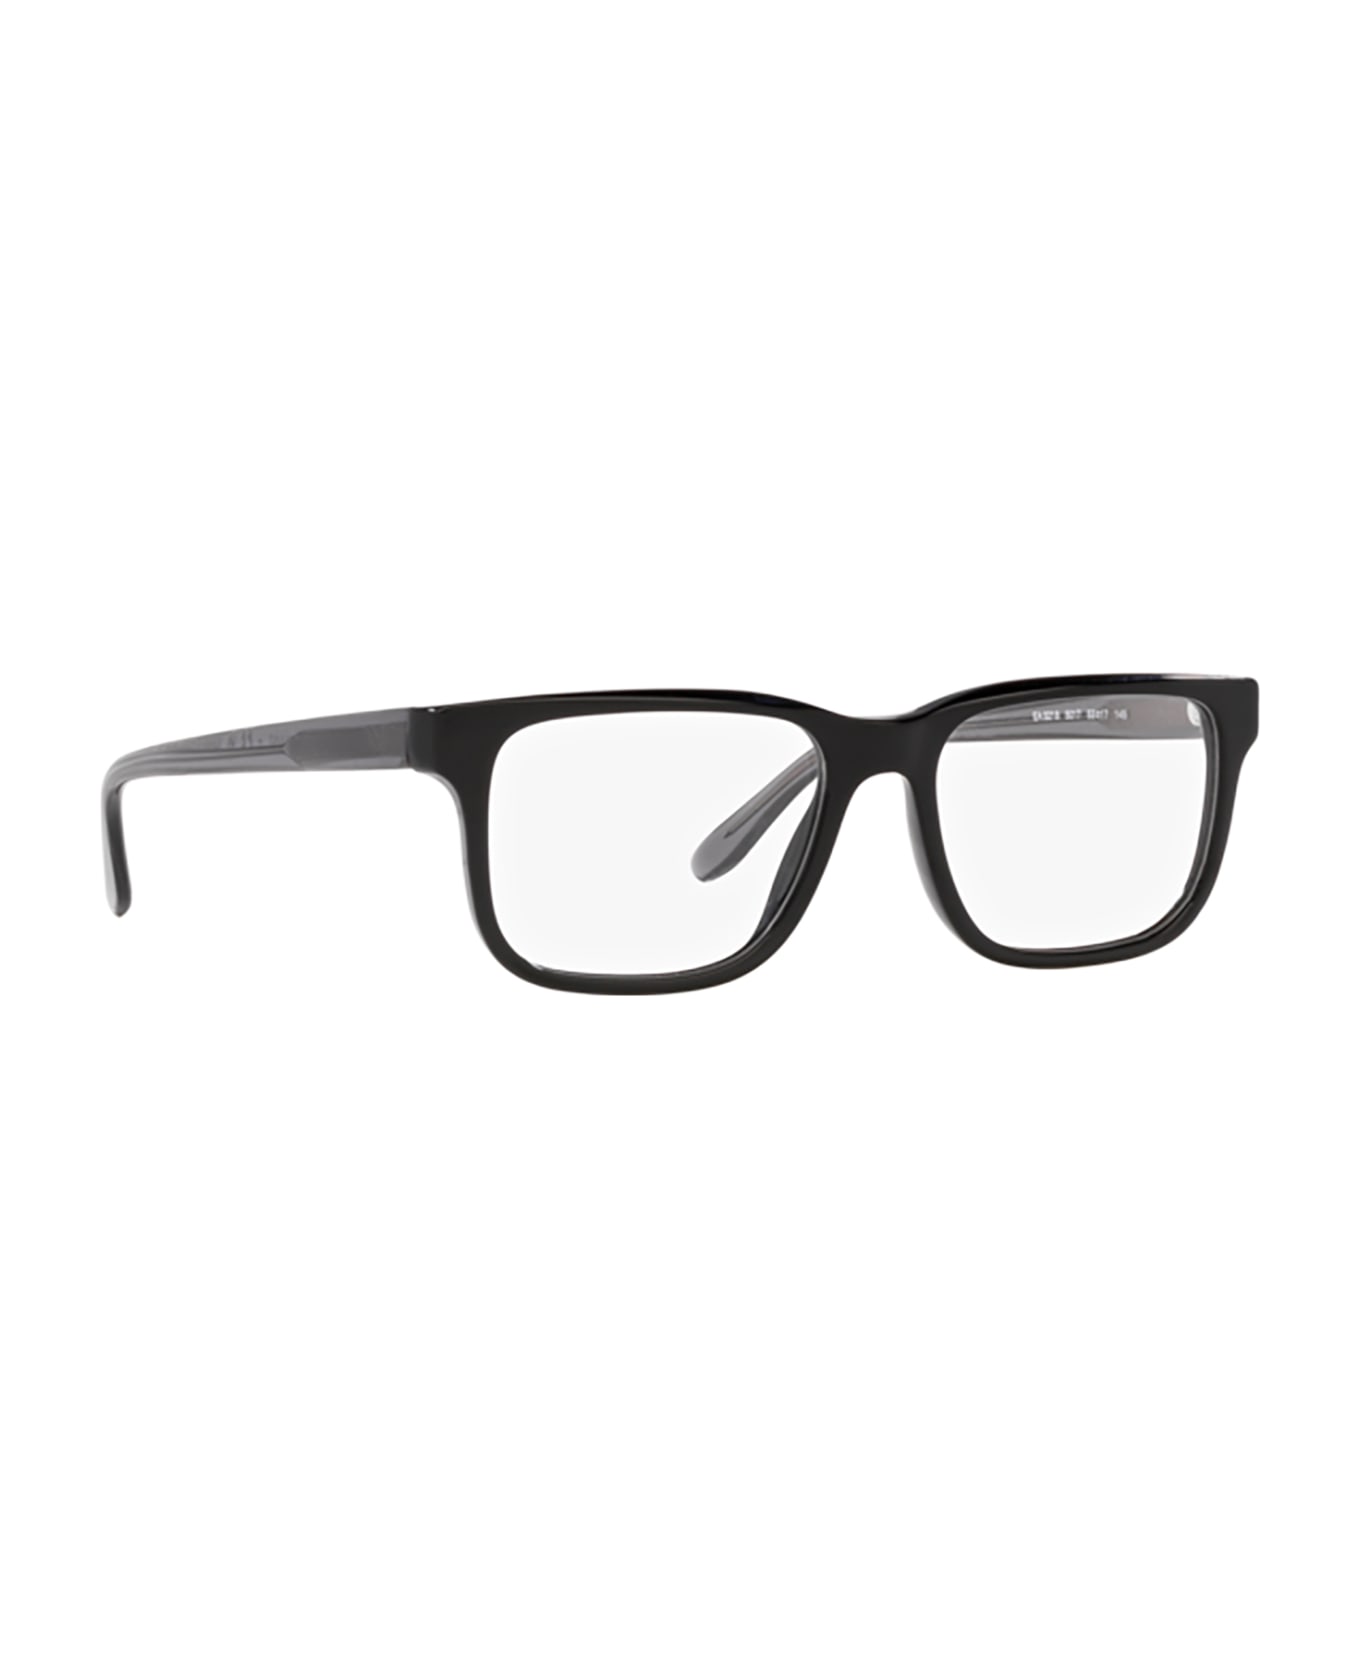 Emporio Armani Ea3218 Black Glasses - Black